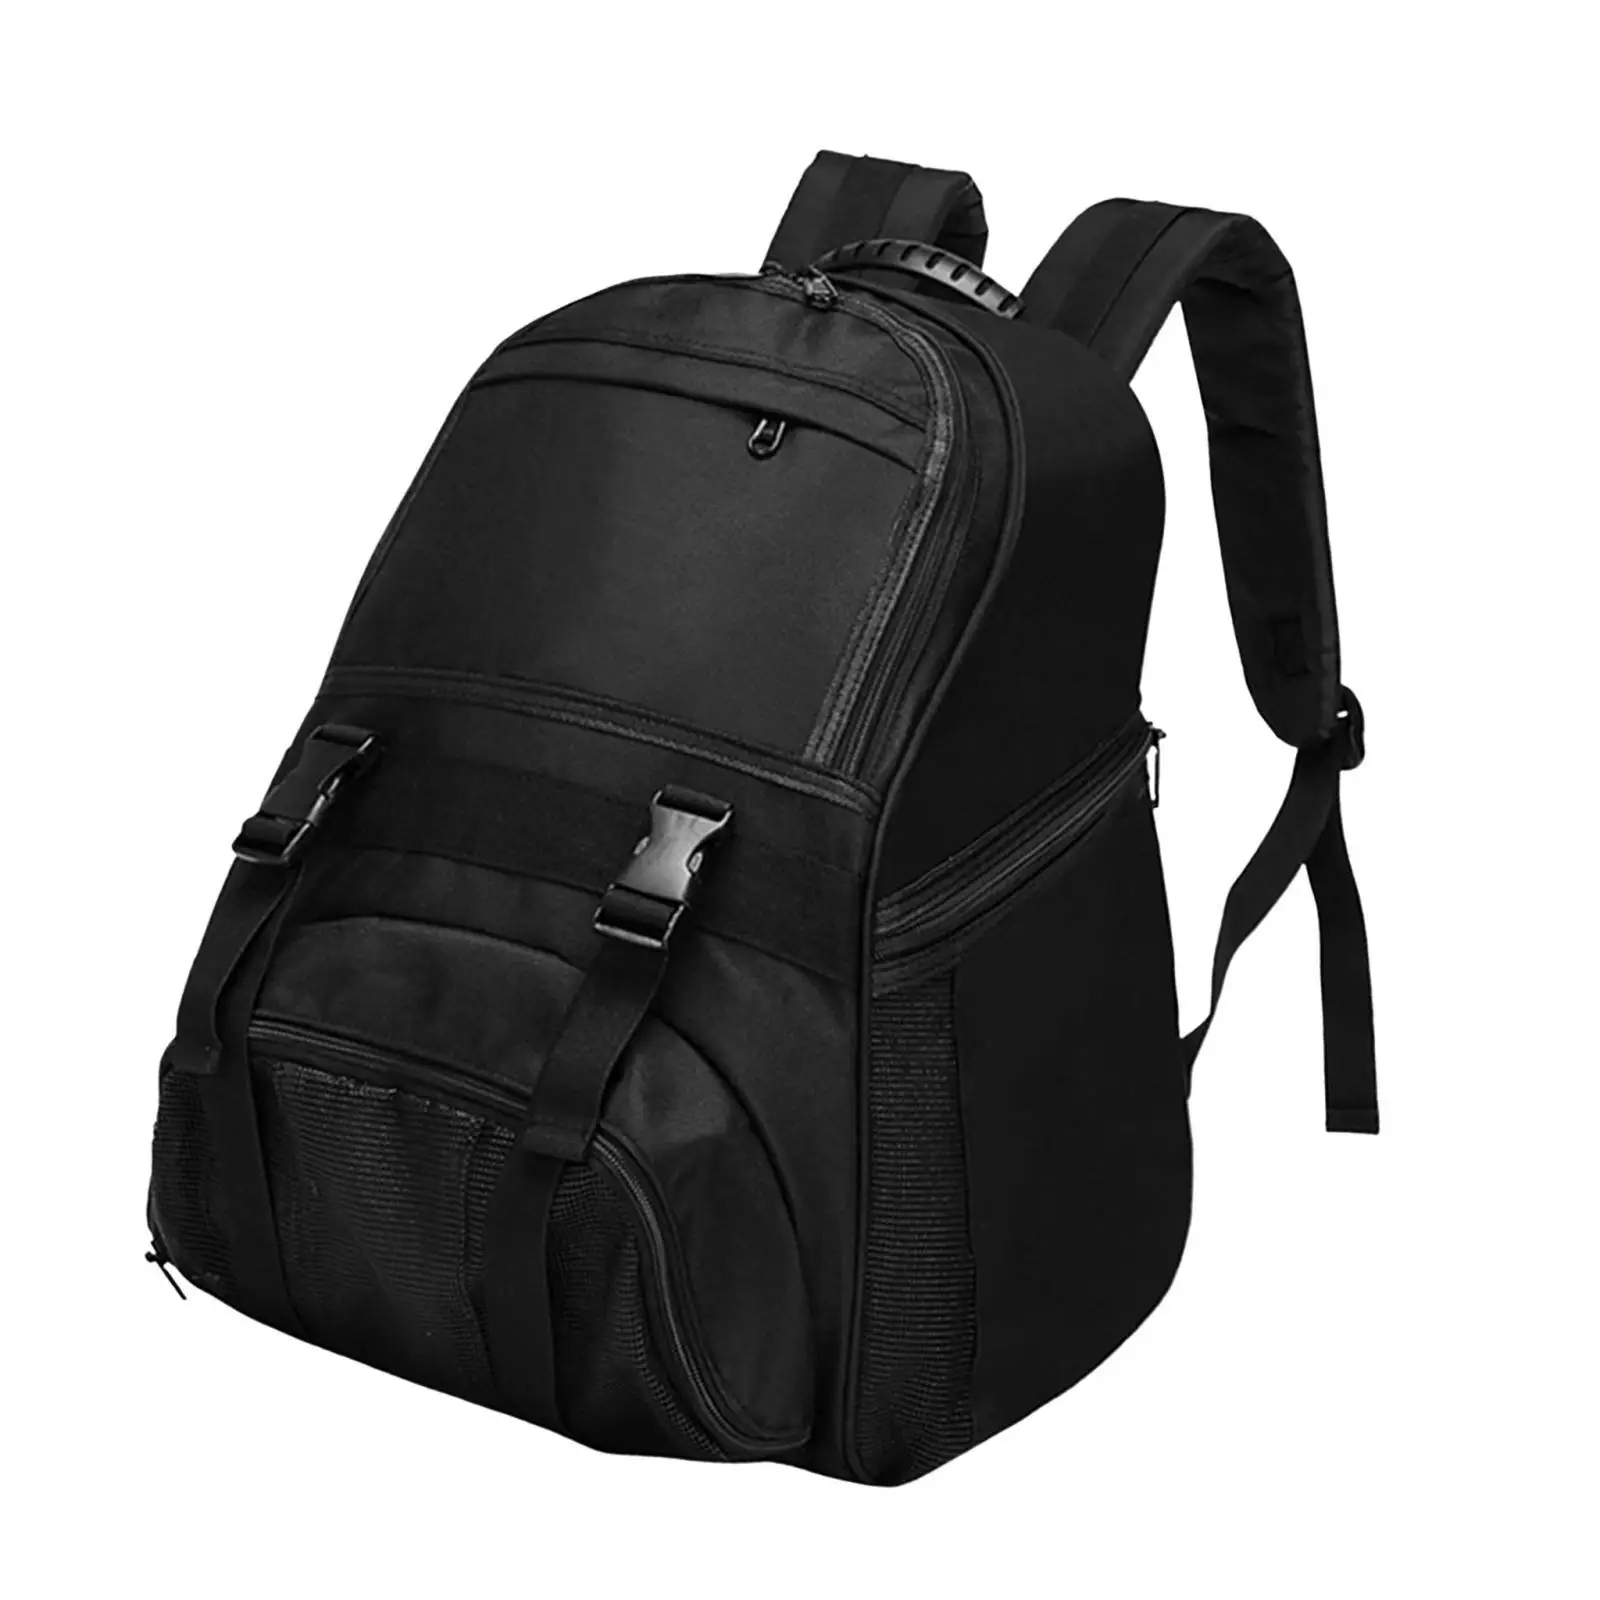 Basketball Backpack Adjustable Shoulder Straps Football Carry Bag Storage Bag for Basketball Volleyball Rugby Ball Soccer